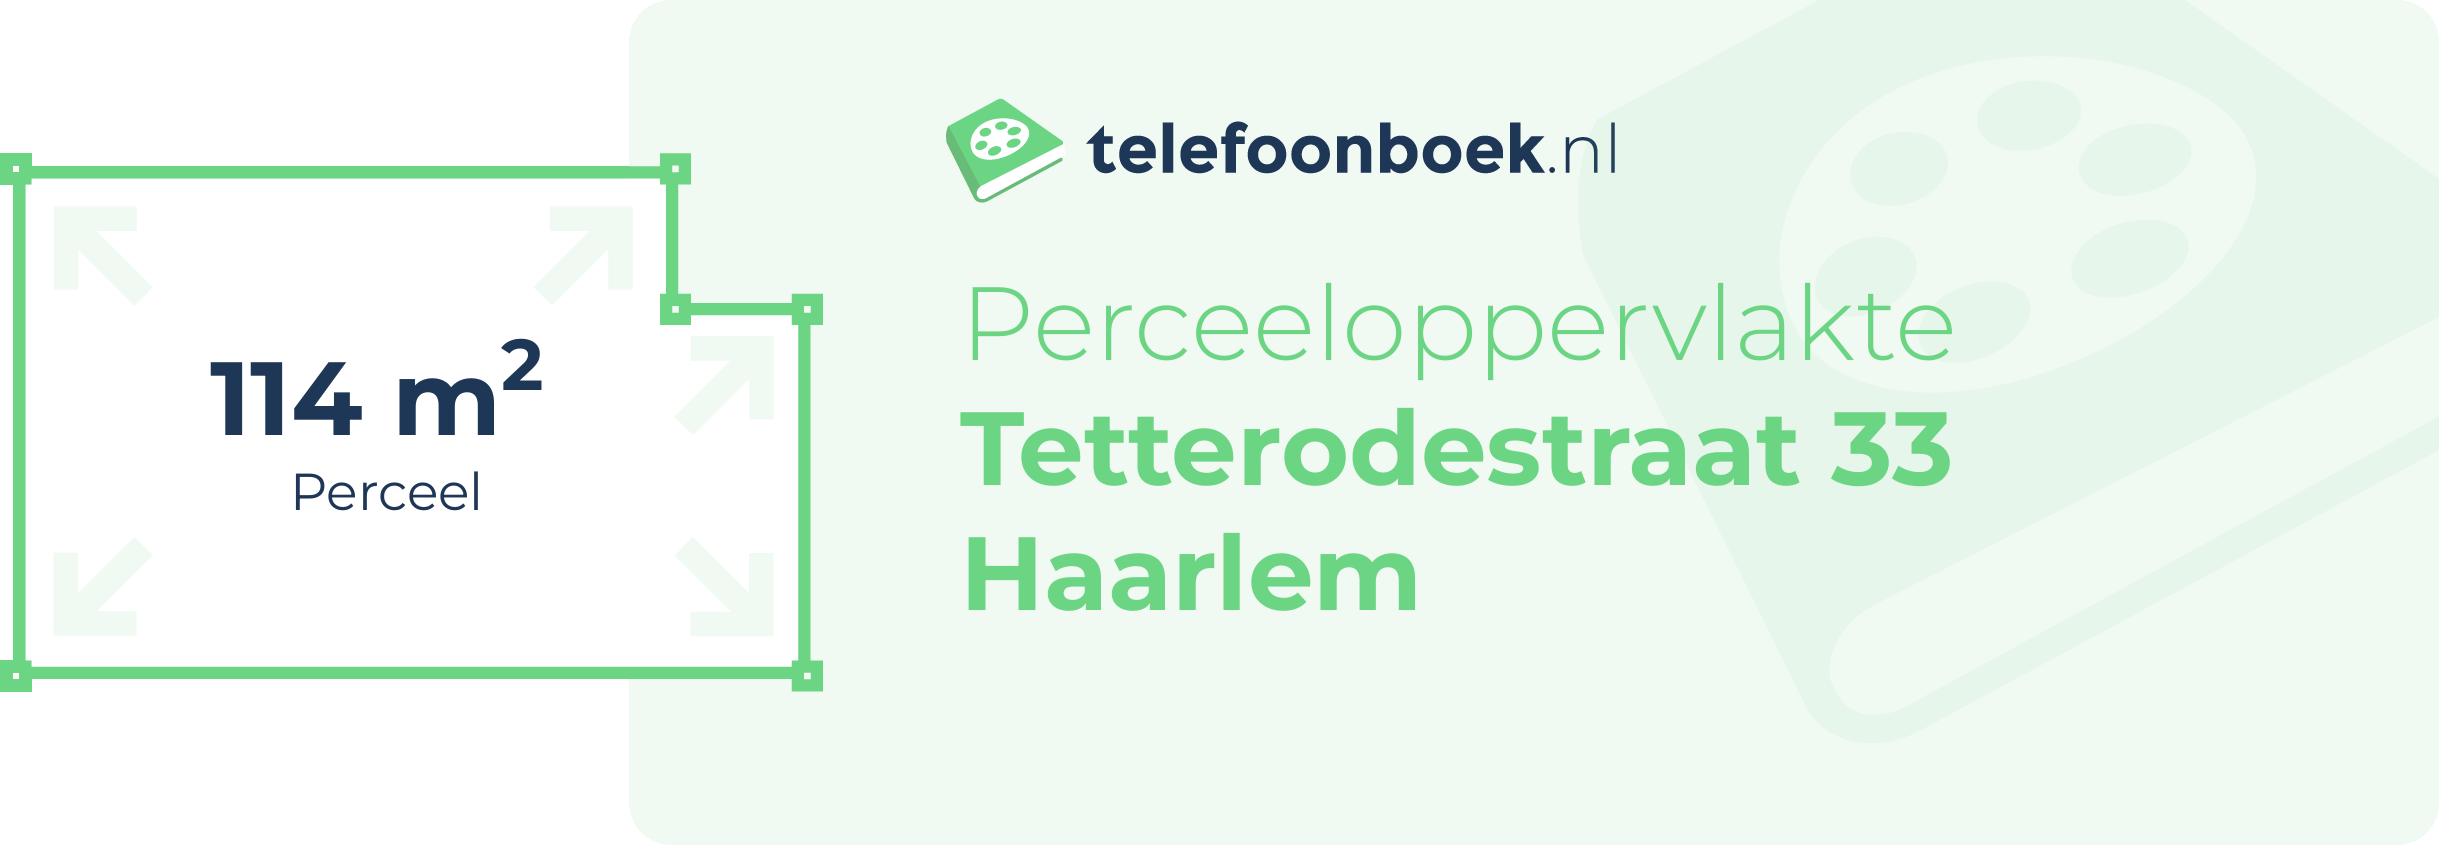 Perceeloppervlakte Tetterodestraat 33 Haarlem